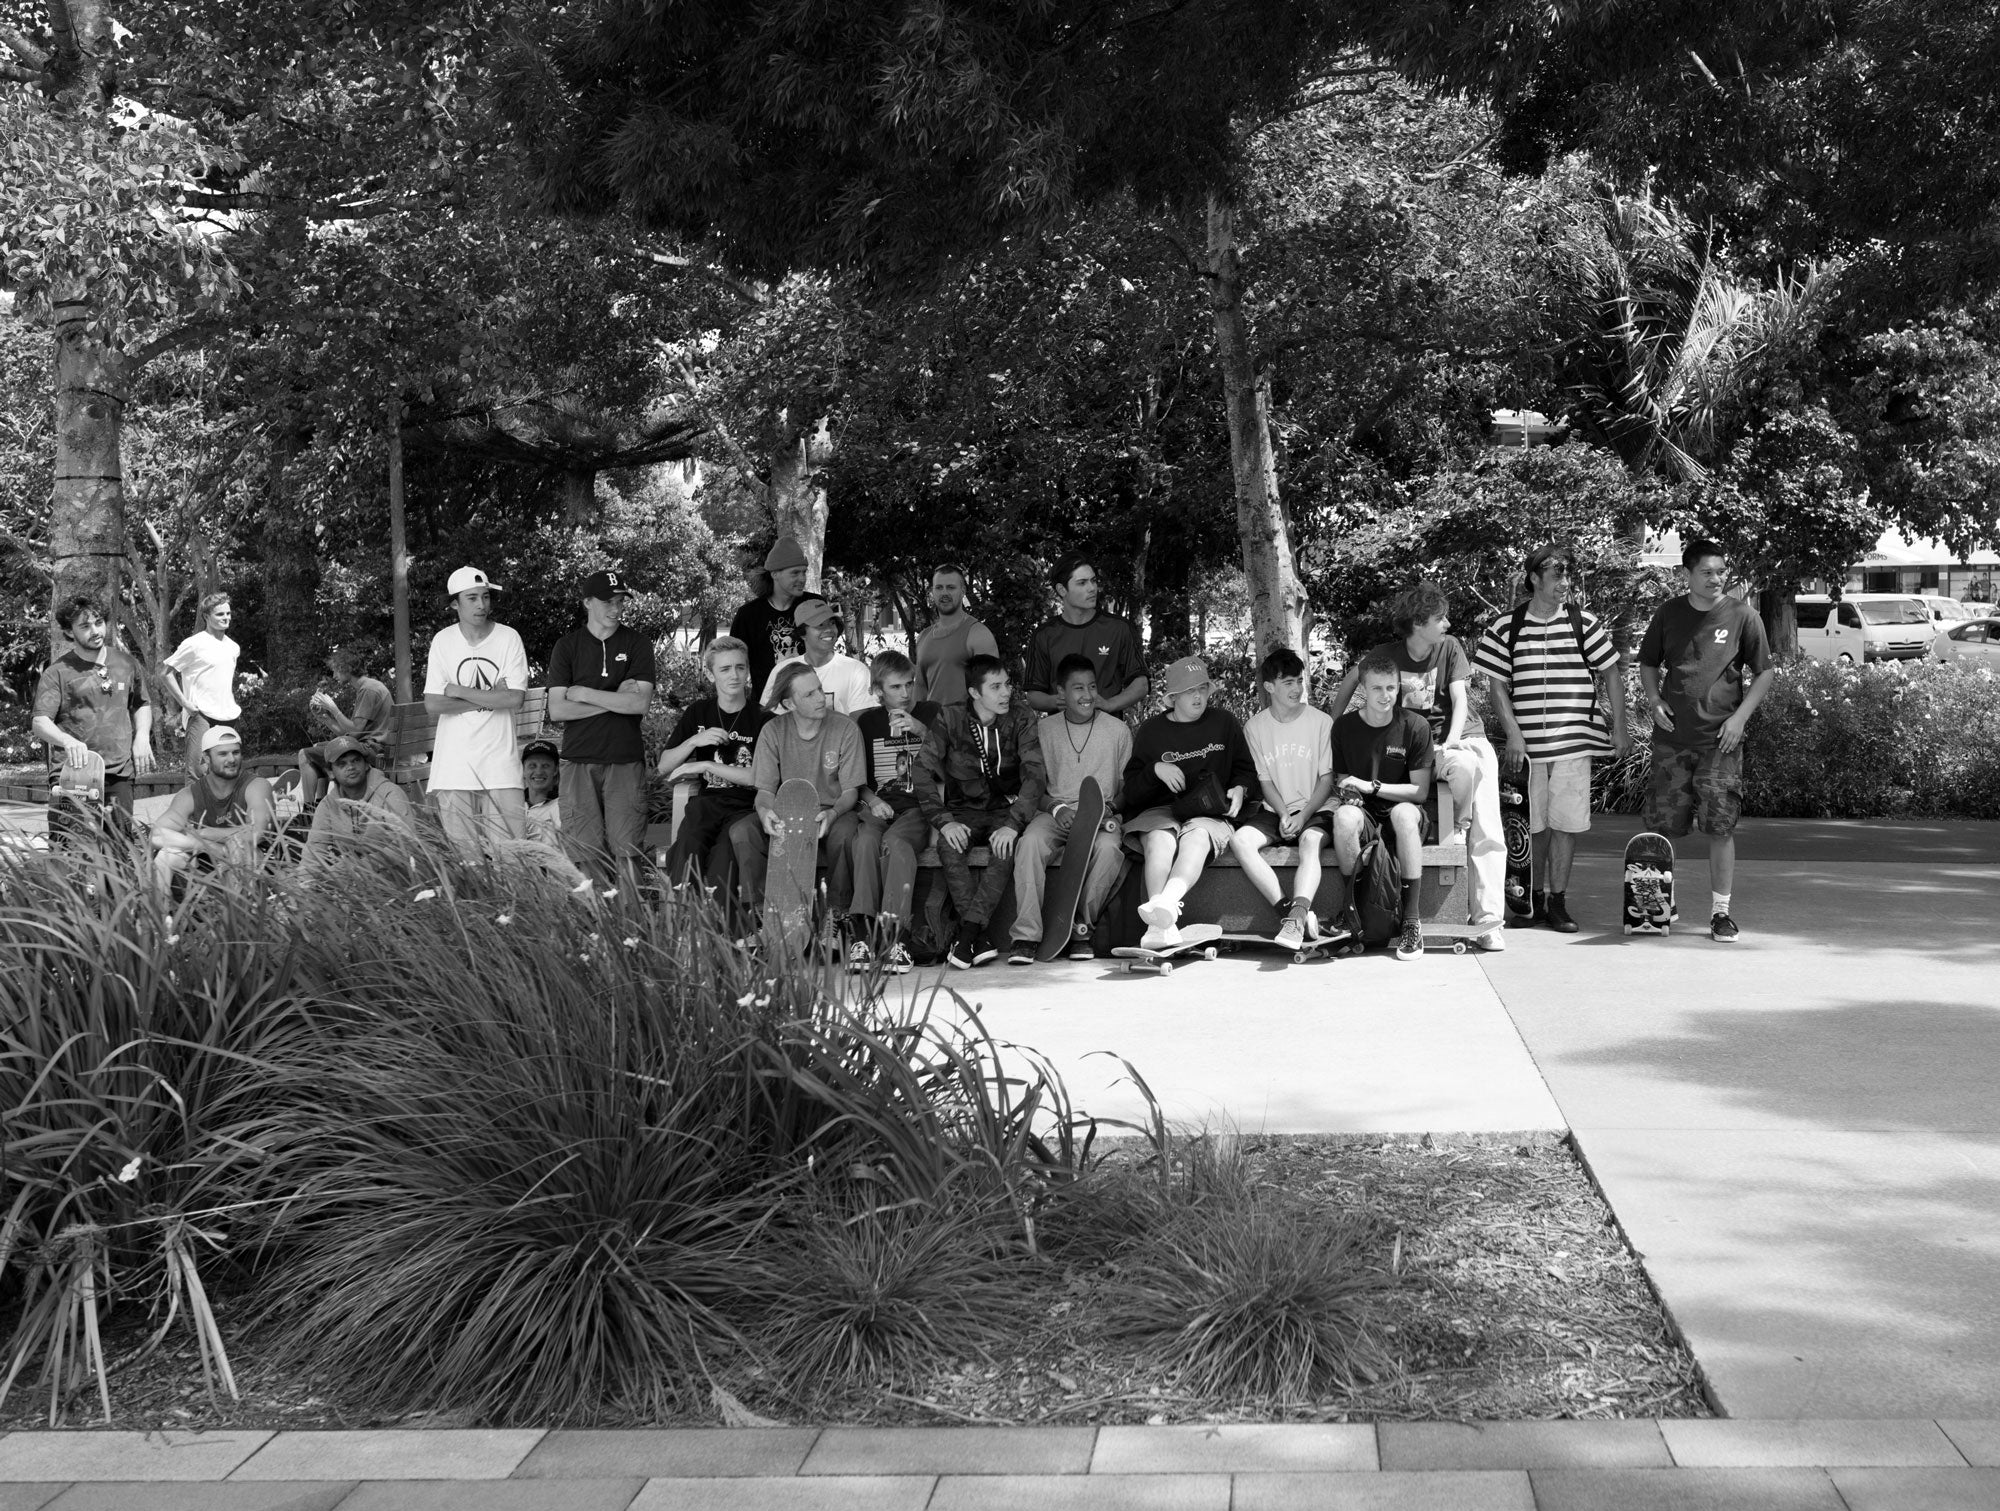 crowds watching skateboarding